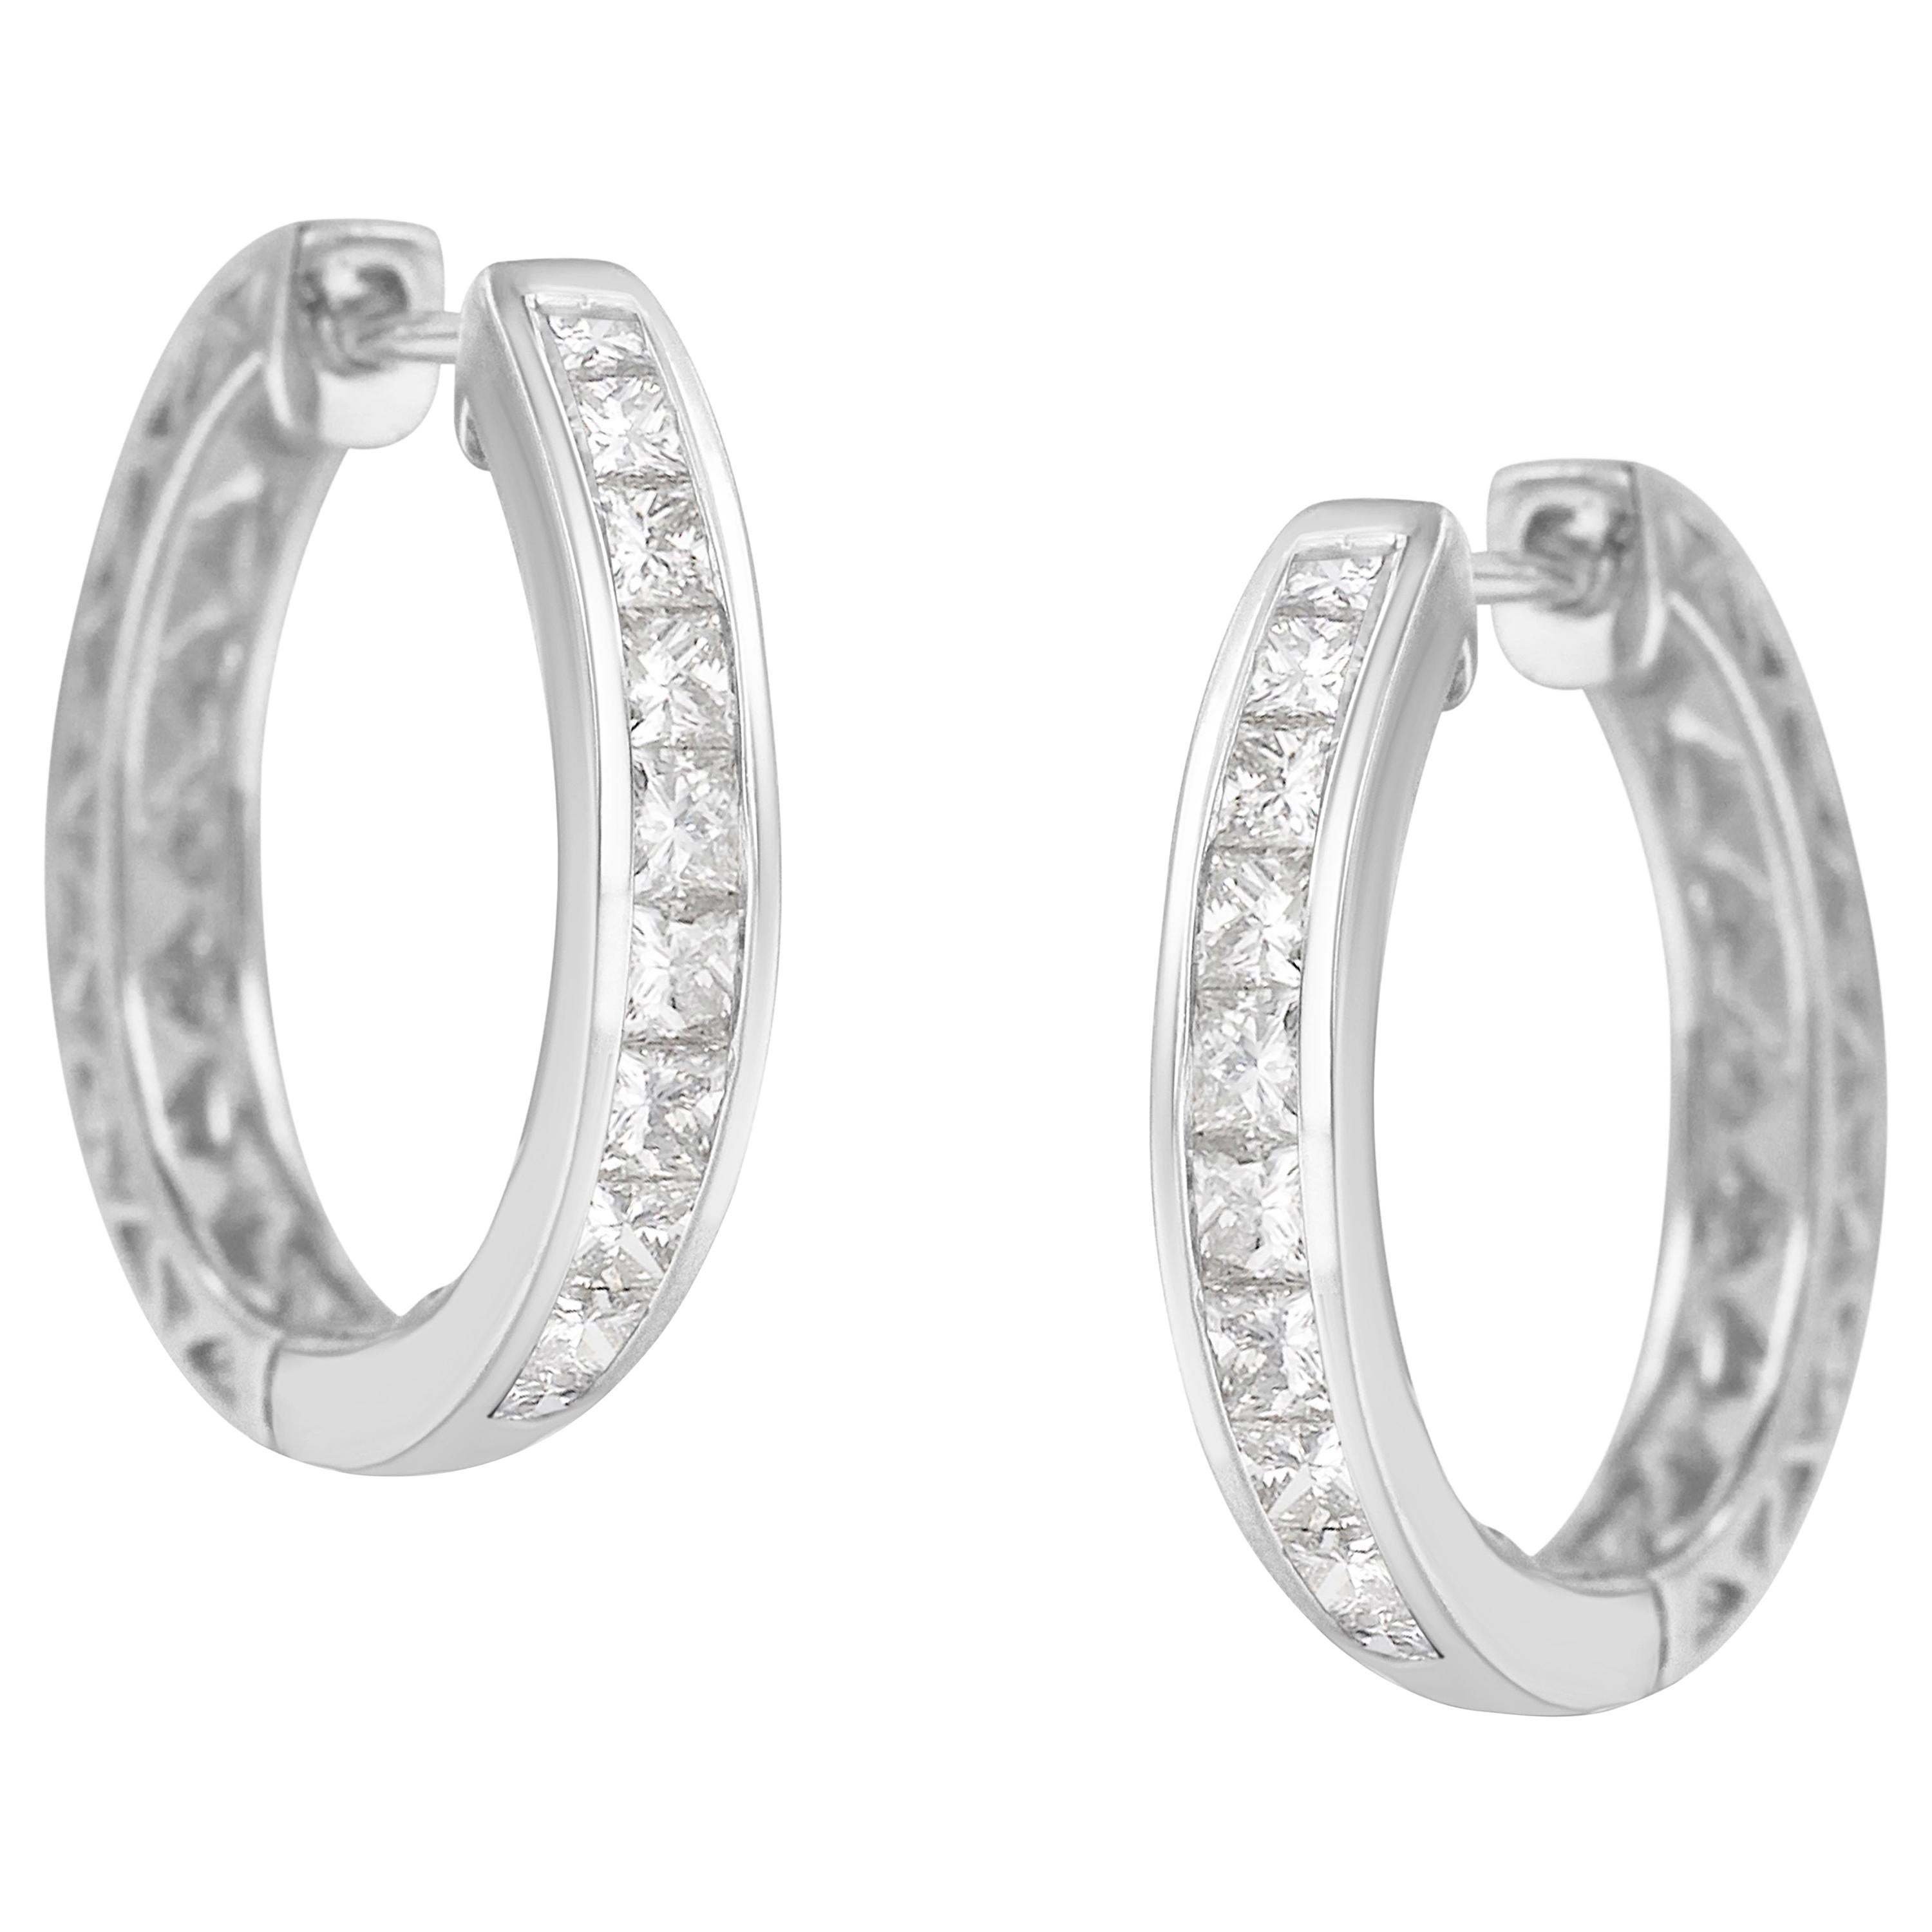 10K White Gold 1.0 Cttw Channel Set Princess-Cut Diamond Hoop Huggy Earrings